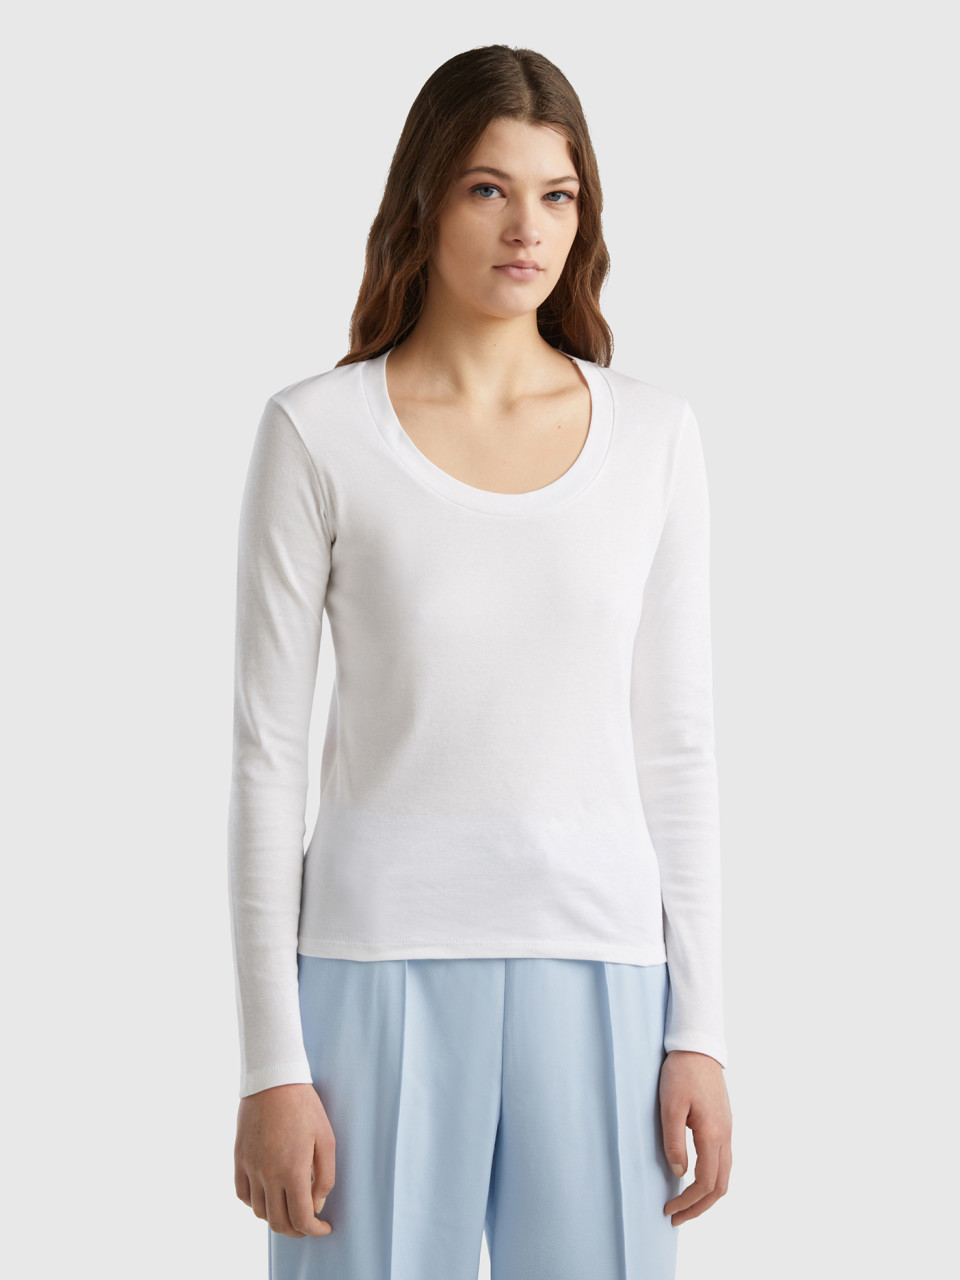 Benetton, Long Sleeve Pure Cotton T-shirt, White, Women